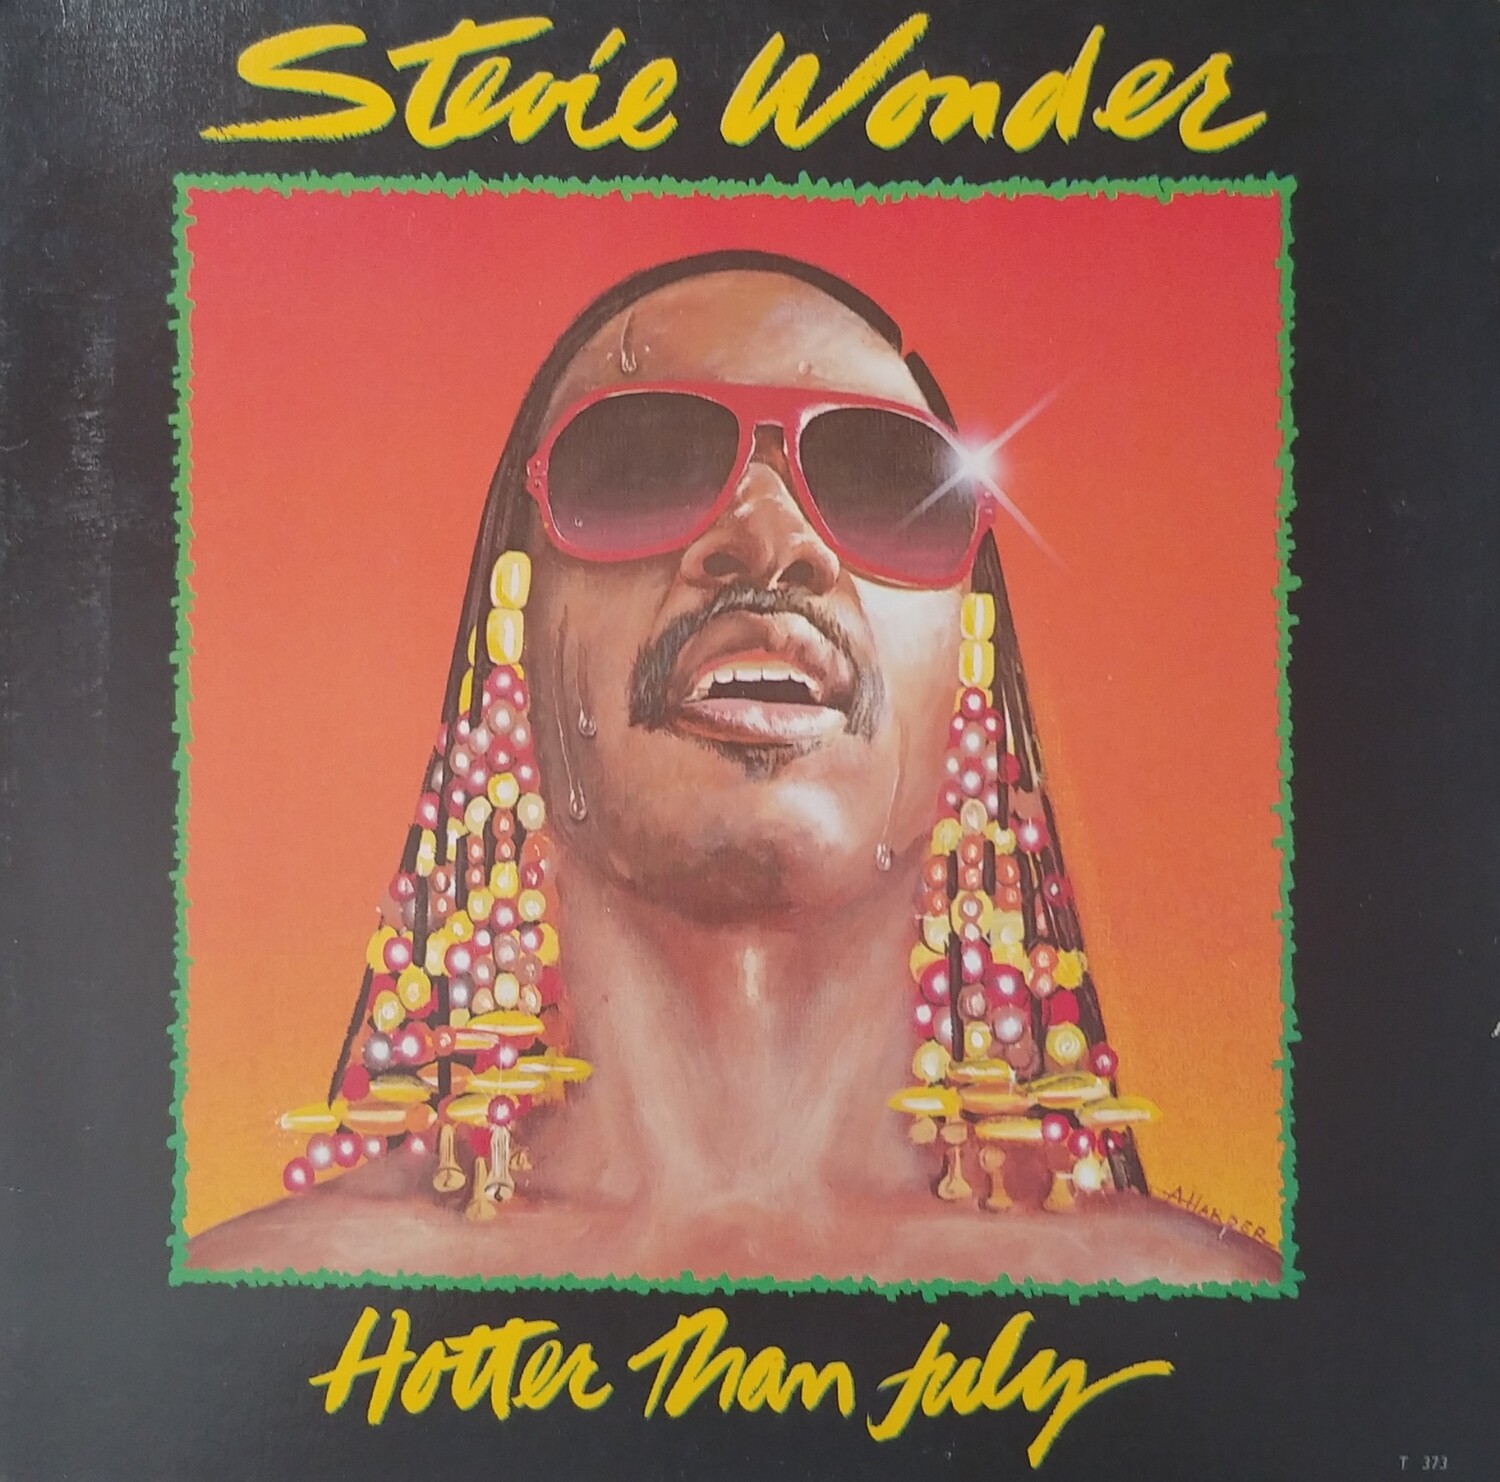 Stevie Wonder - Hotter than July